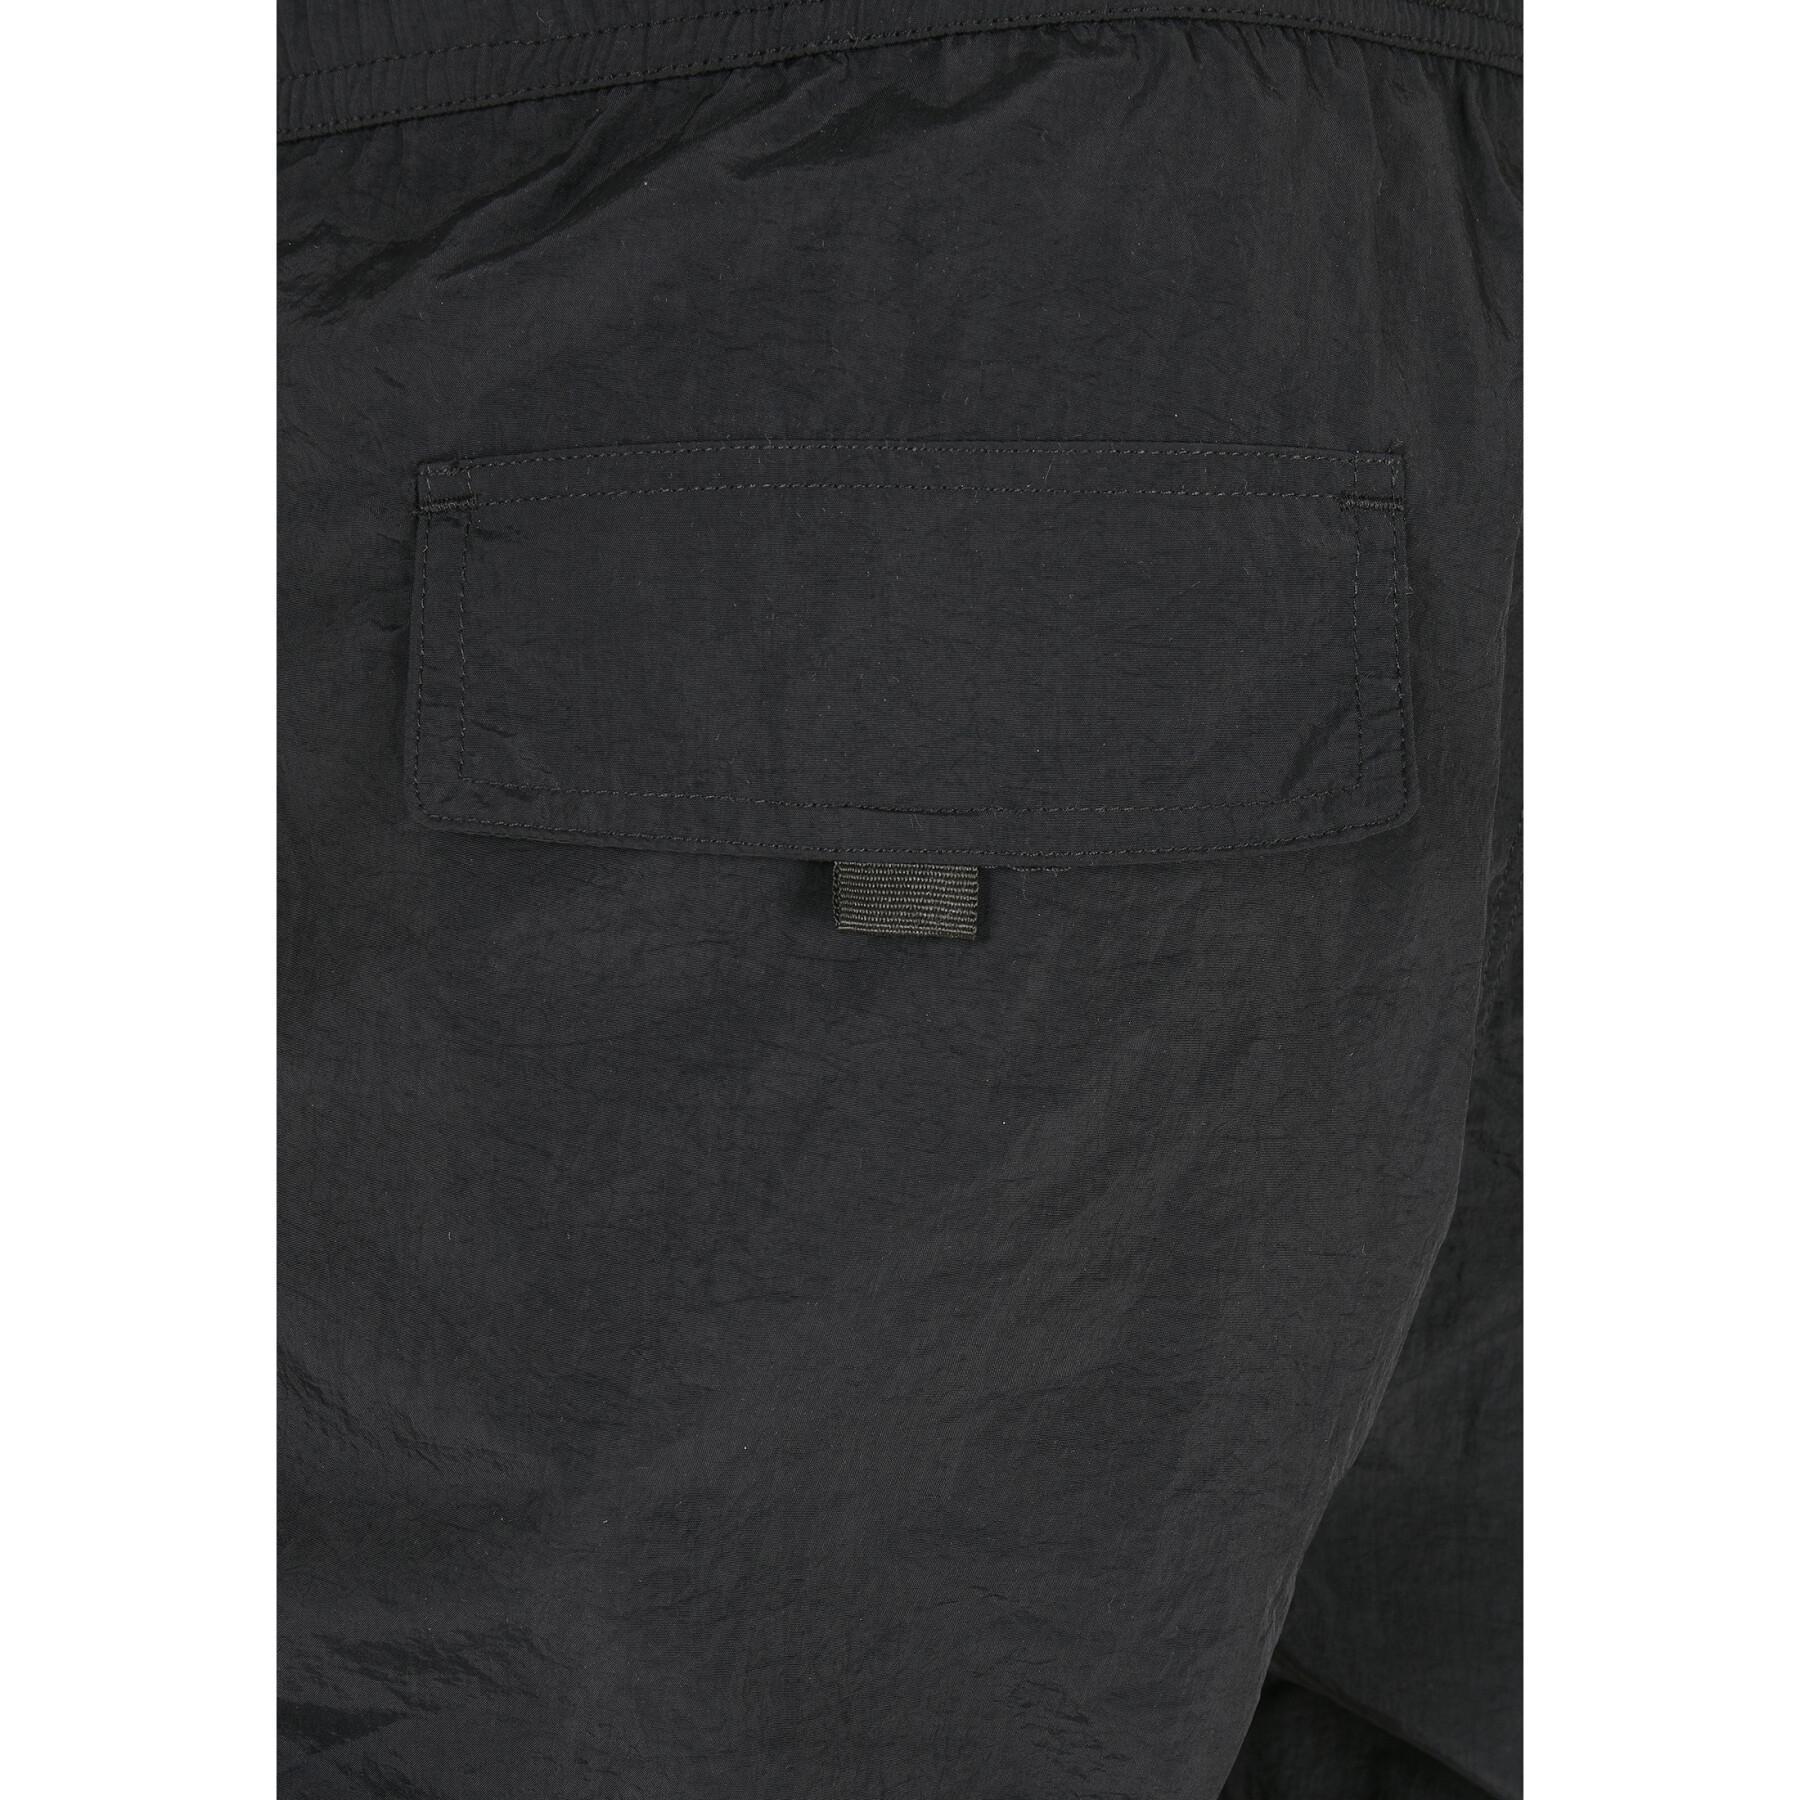 Spodnie Cargo Urban Classics adjustable nylon (Grandes tailles)